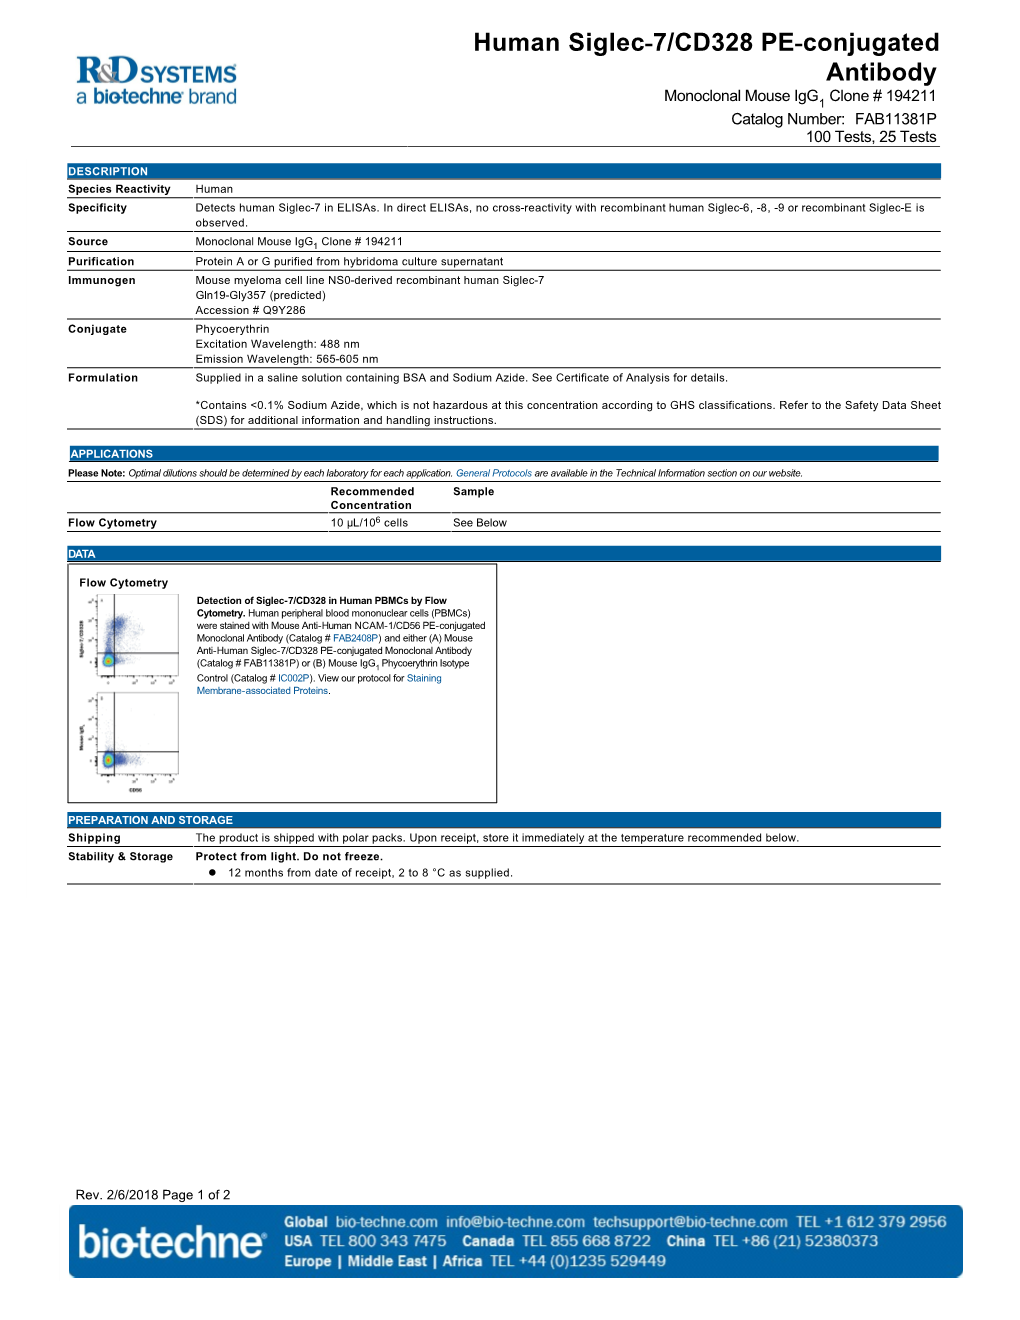 Human Siglec-7/CD328 PE-Conjugated Antibody